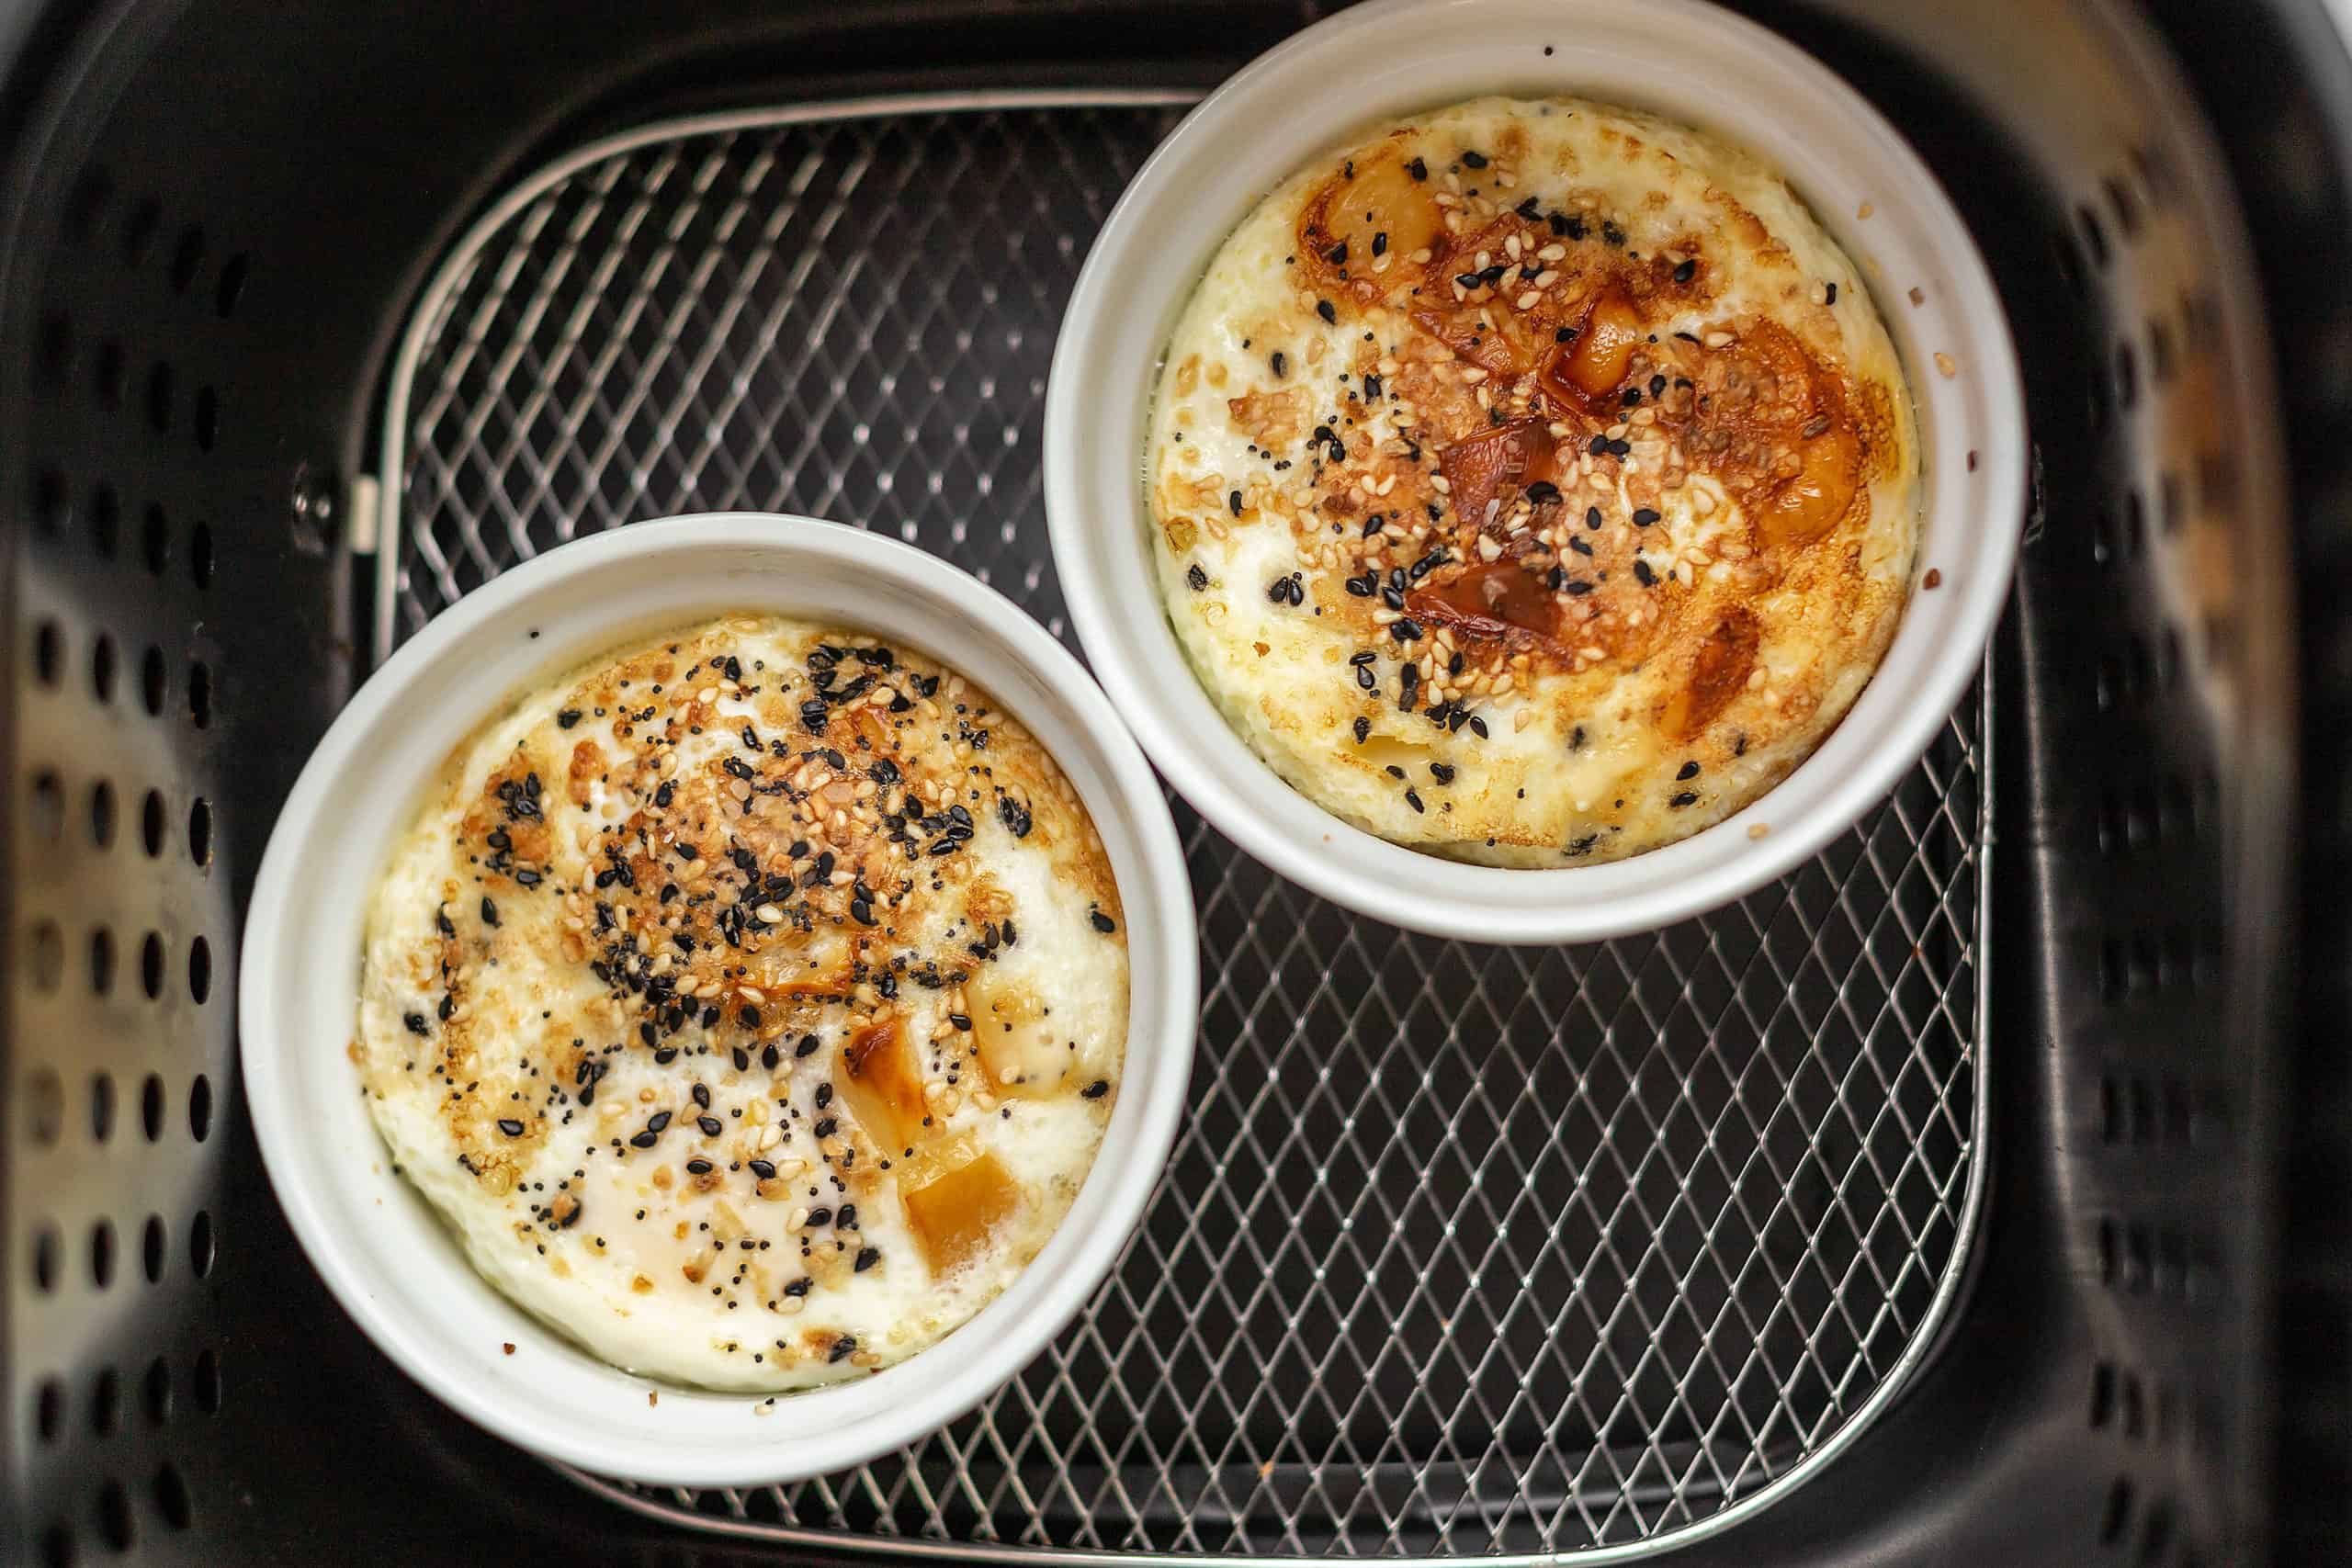 https://jenniferbanz.com/wp-content/uploads/2020/10/air-fryer-baked-eggs-recipe-image-scaled.jpg